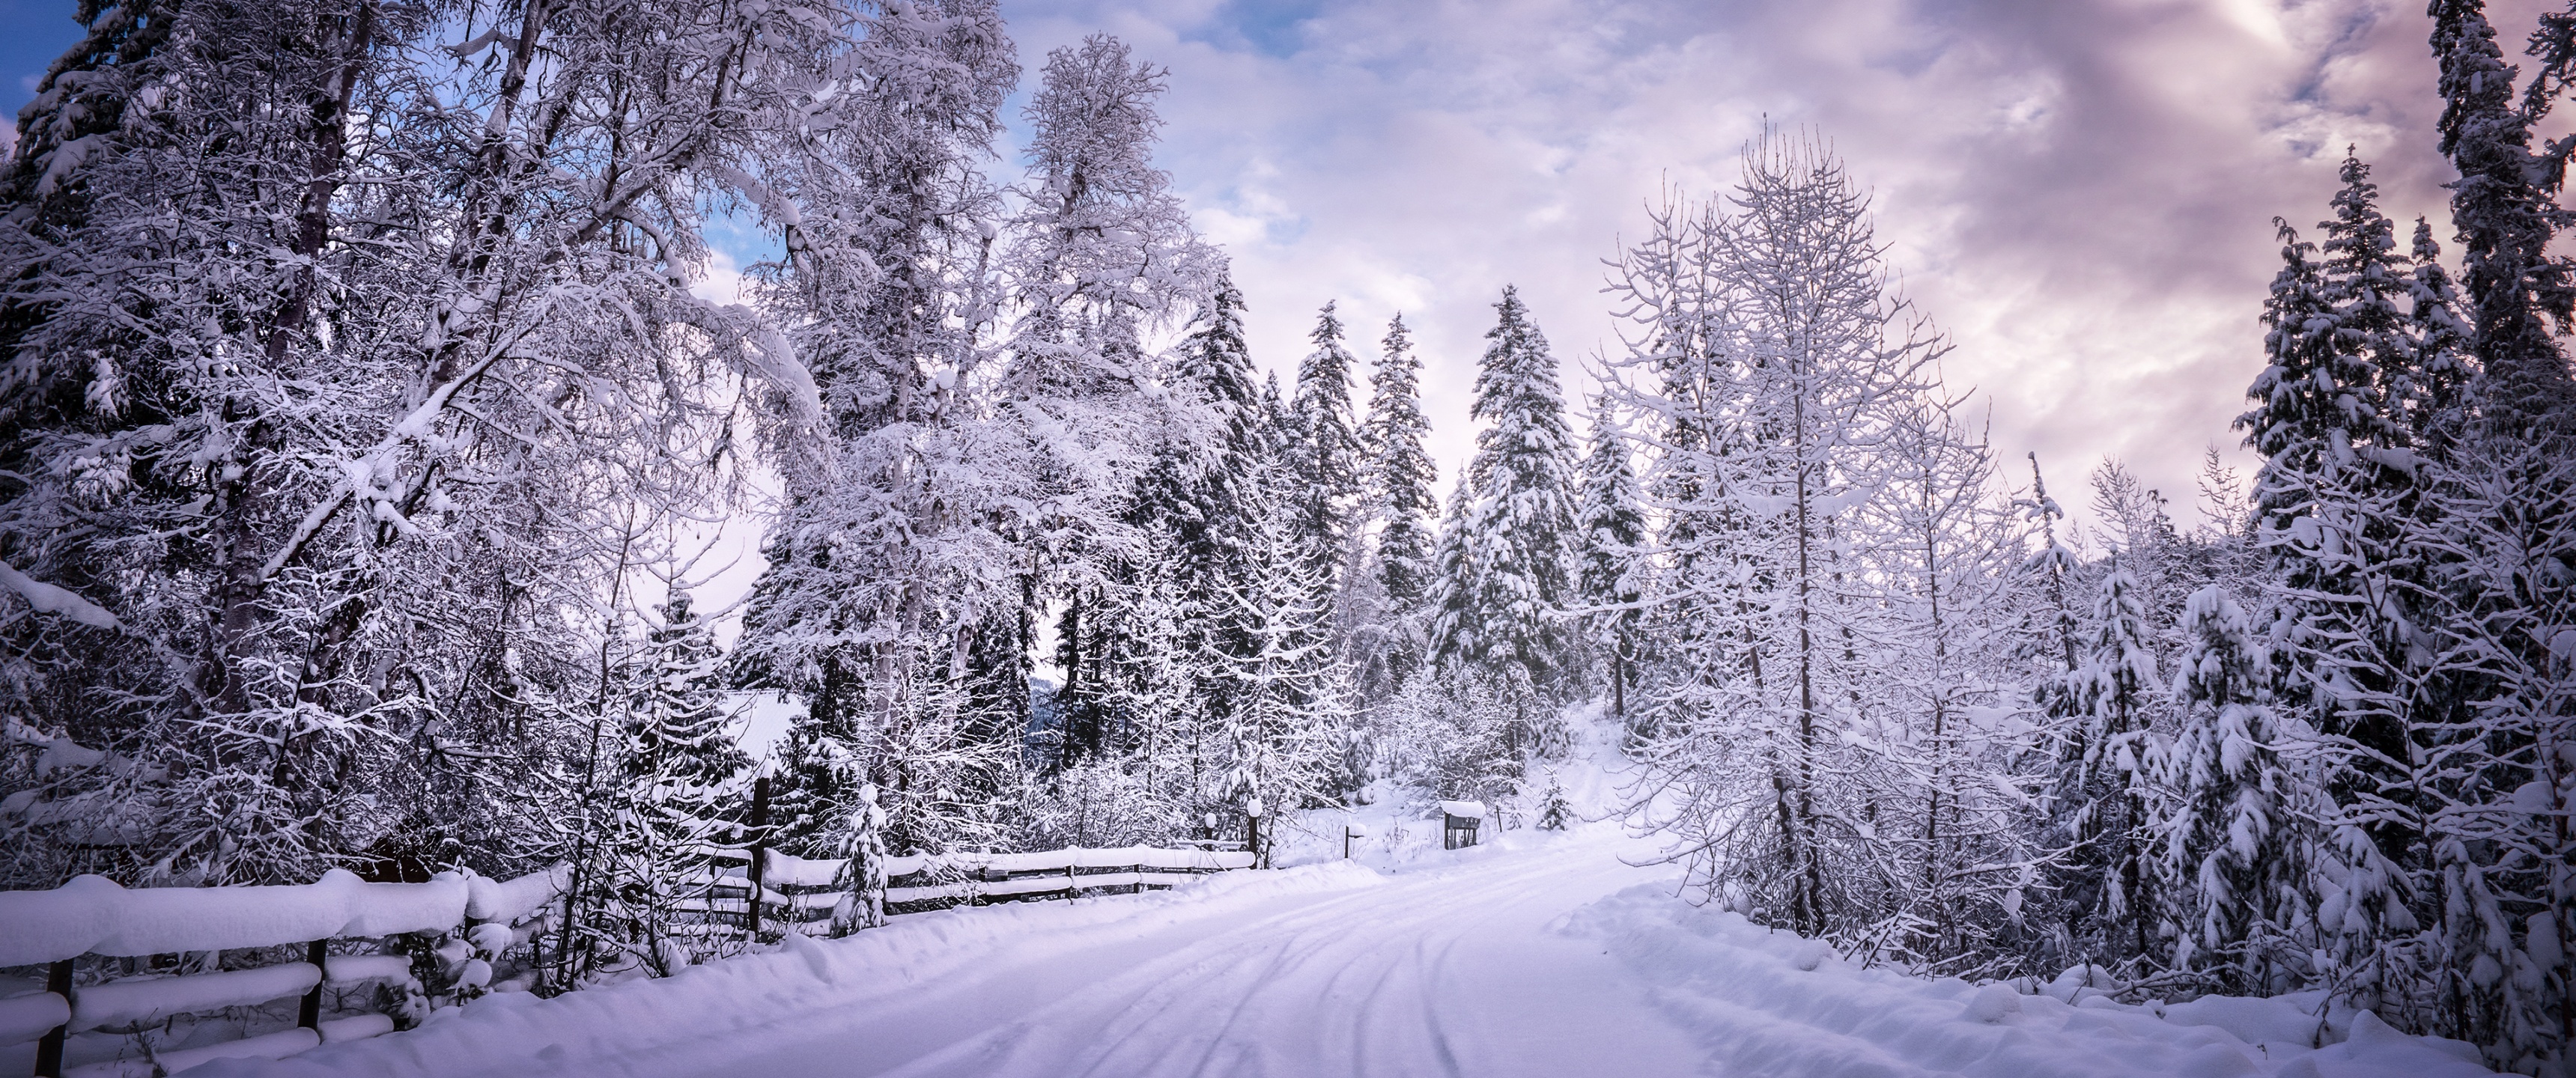 Snowy Trees Wallpaper 4K, Winter Road, Nature, #3689